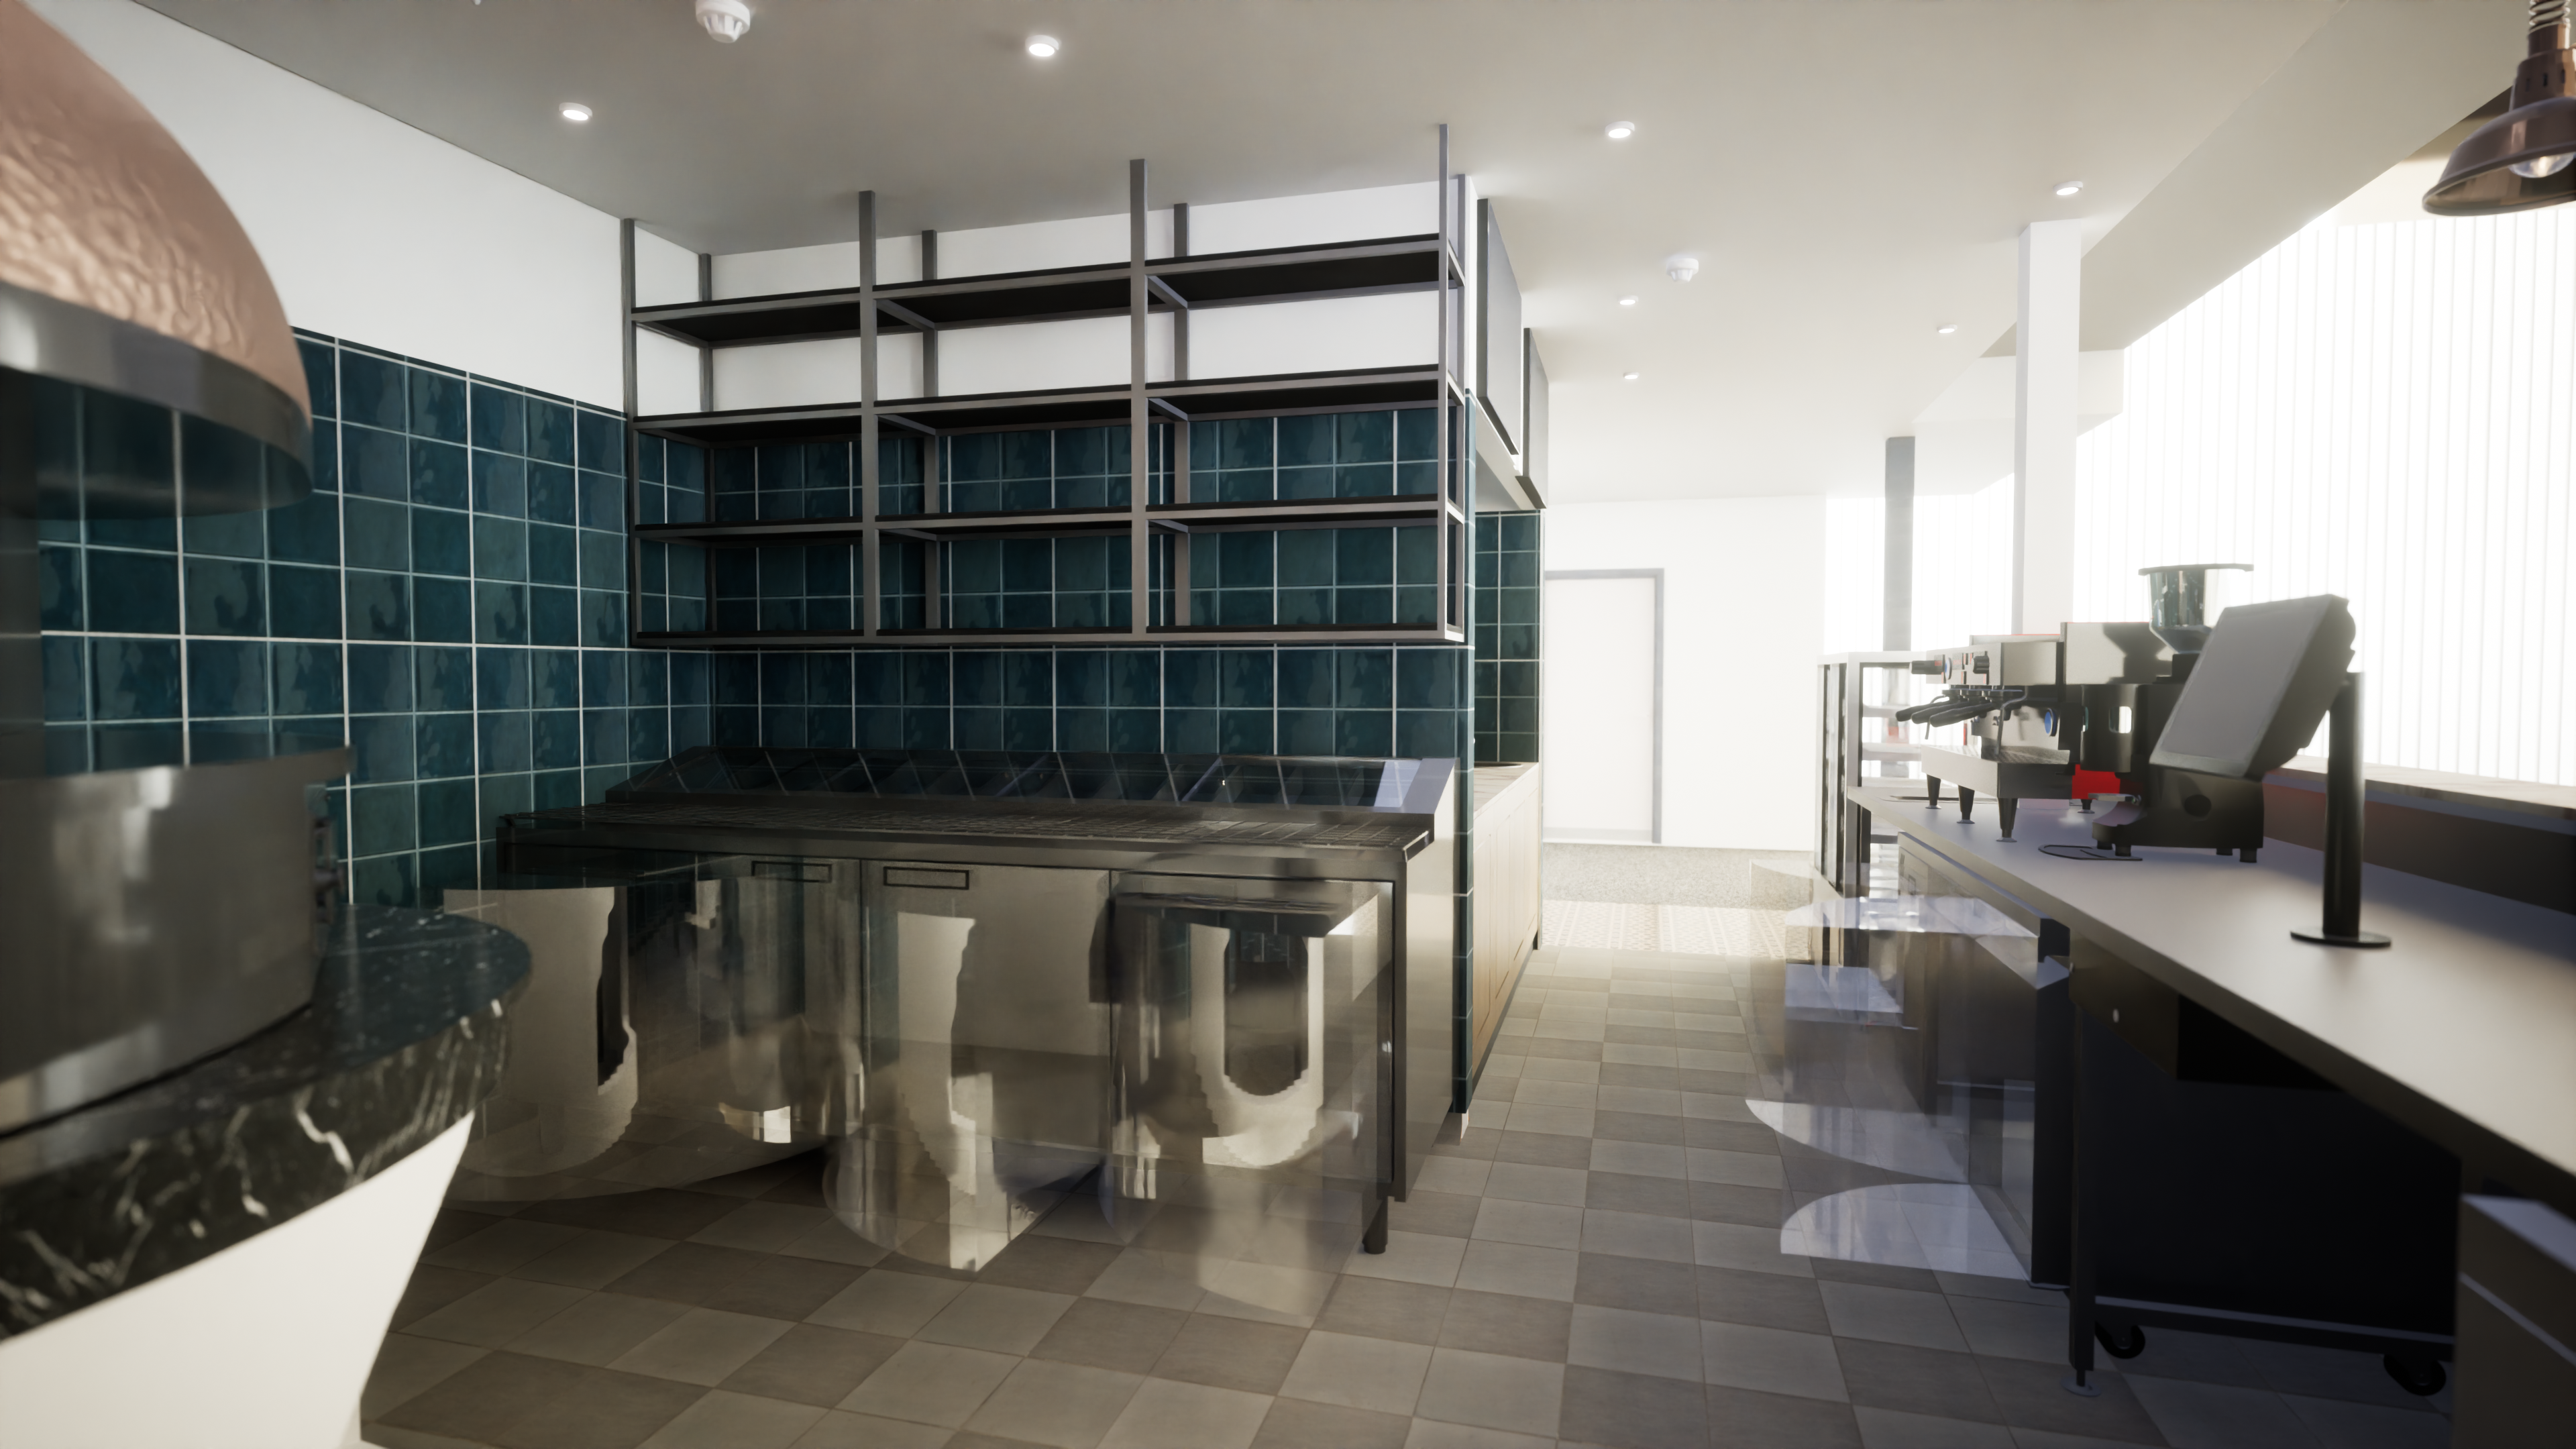 CITOS 3D visualisation of kitchen